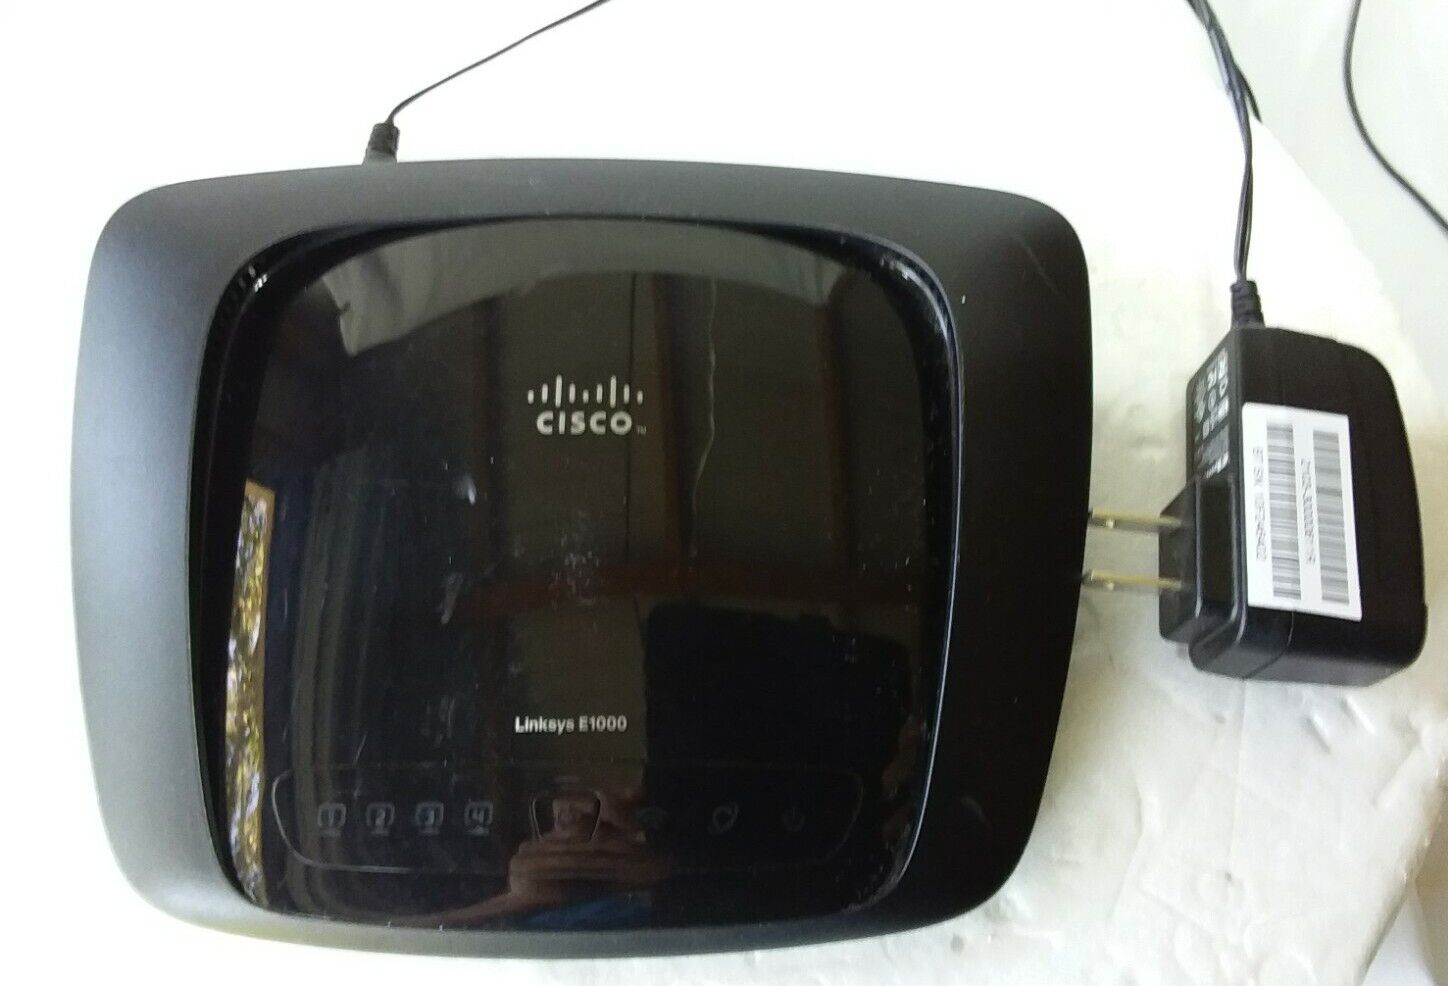 Cisco Linksys E1000 v2 Wireless N Router 300 Mbps 4-Port Fast Ethernet